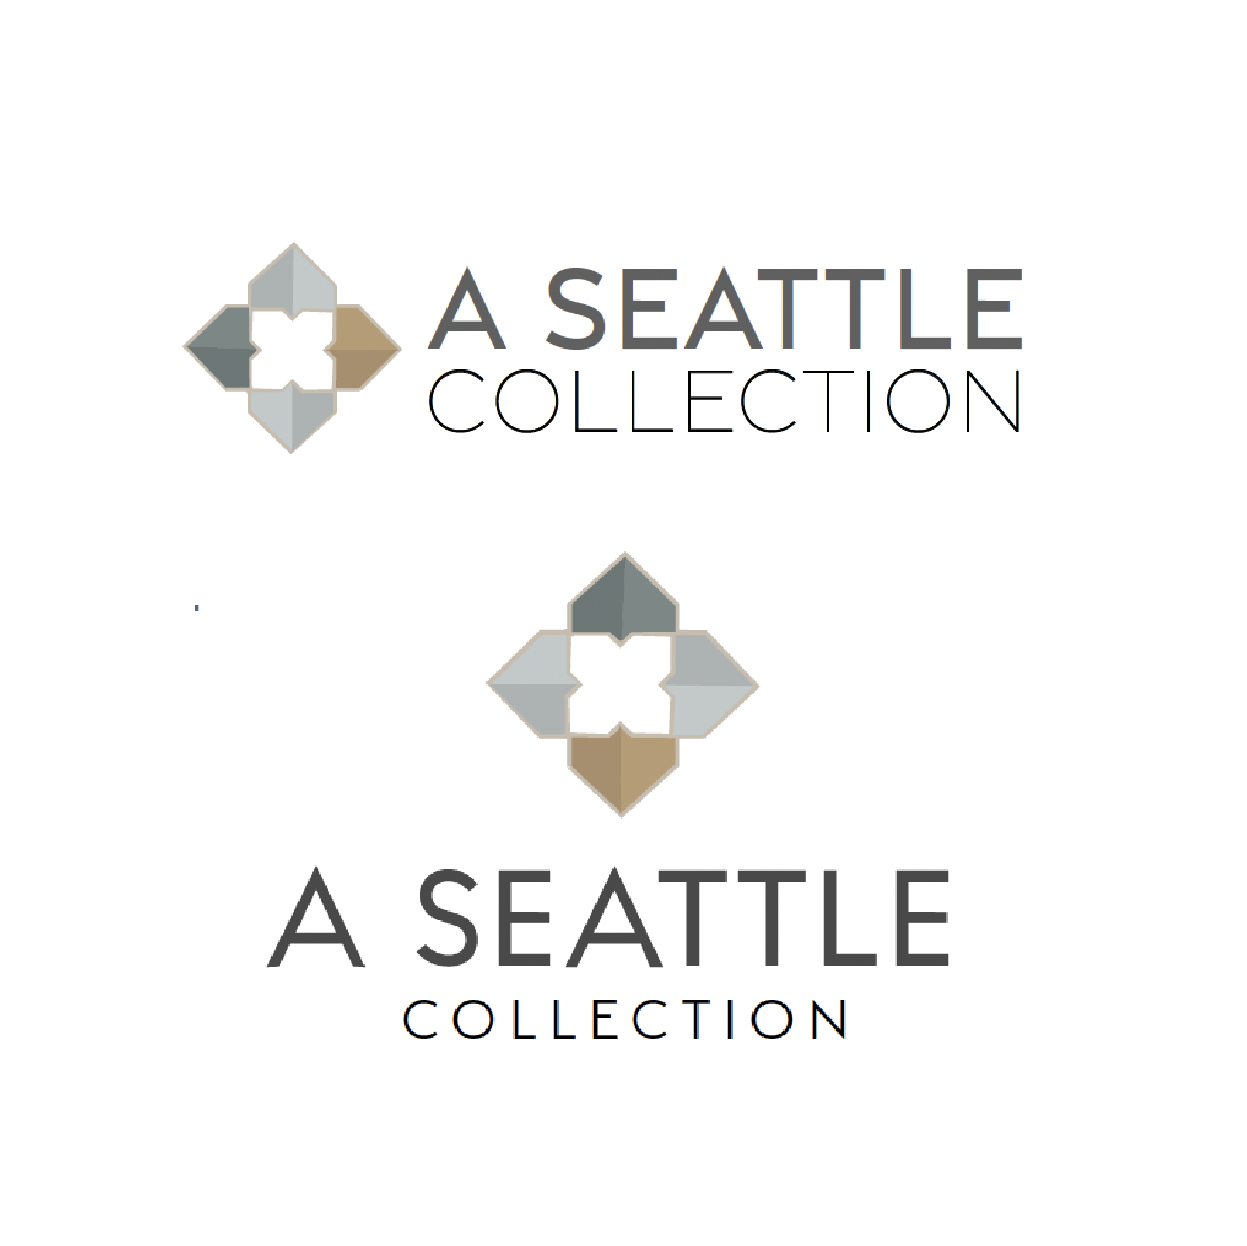 Hyatt_A Seattle Collection_LogoComps-02.png